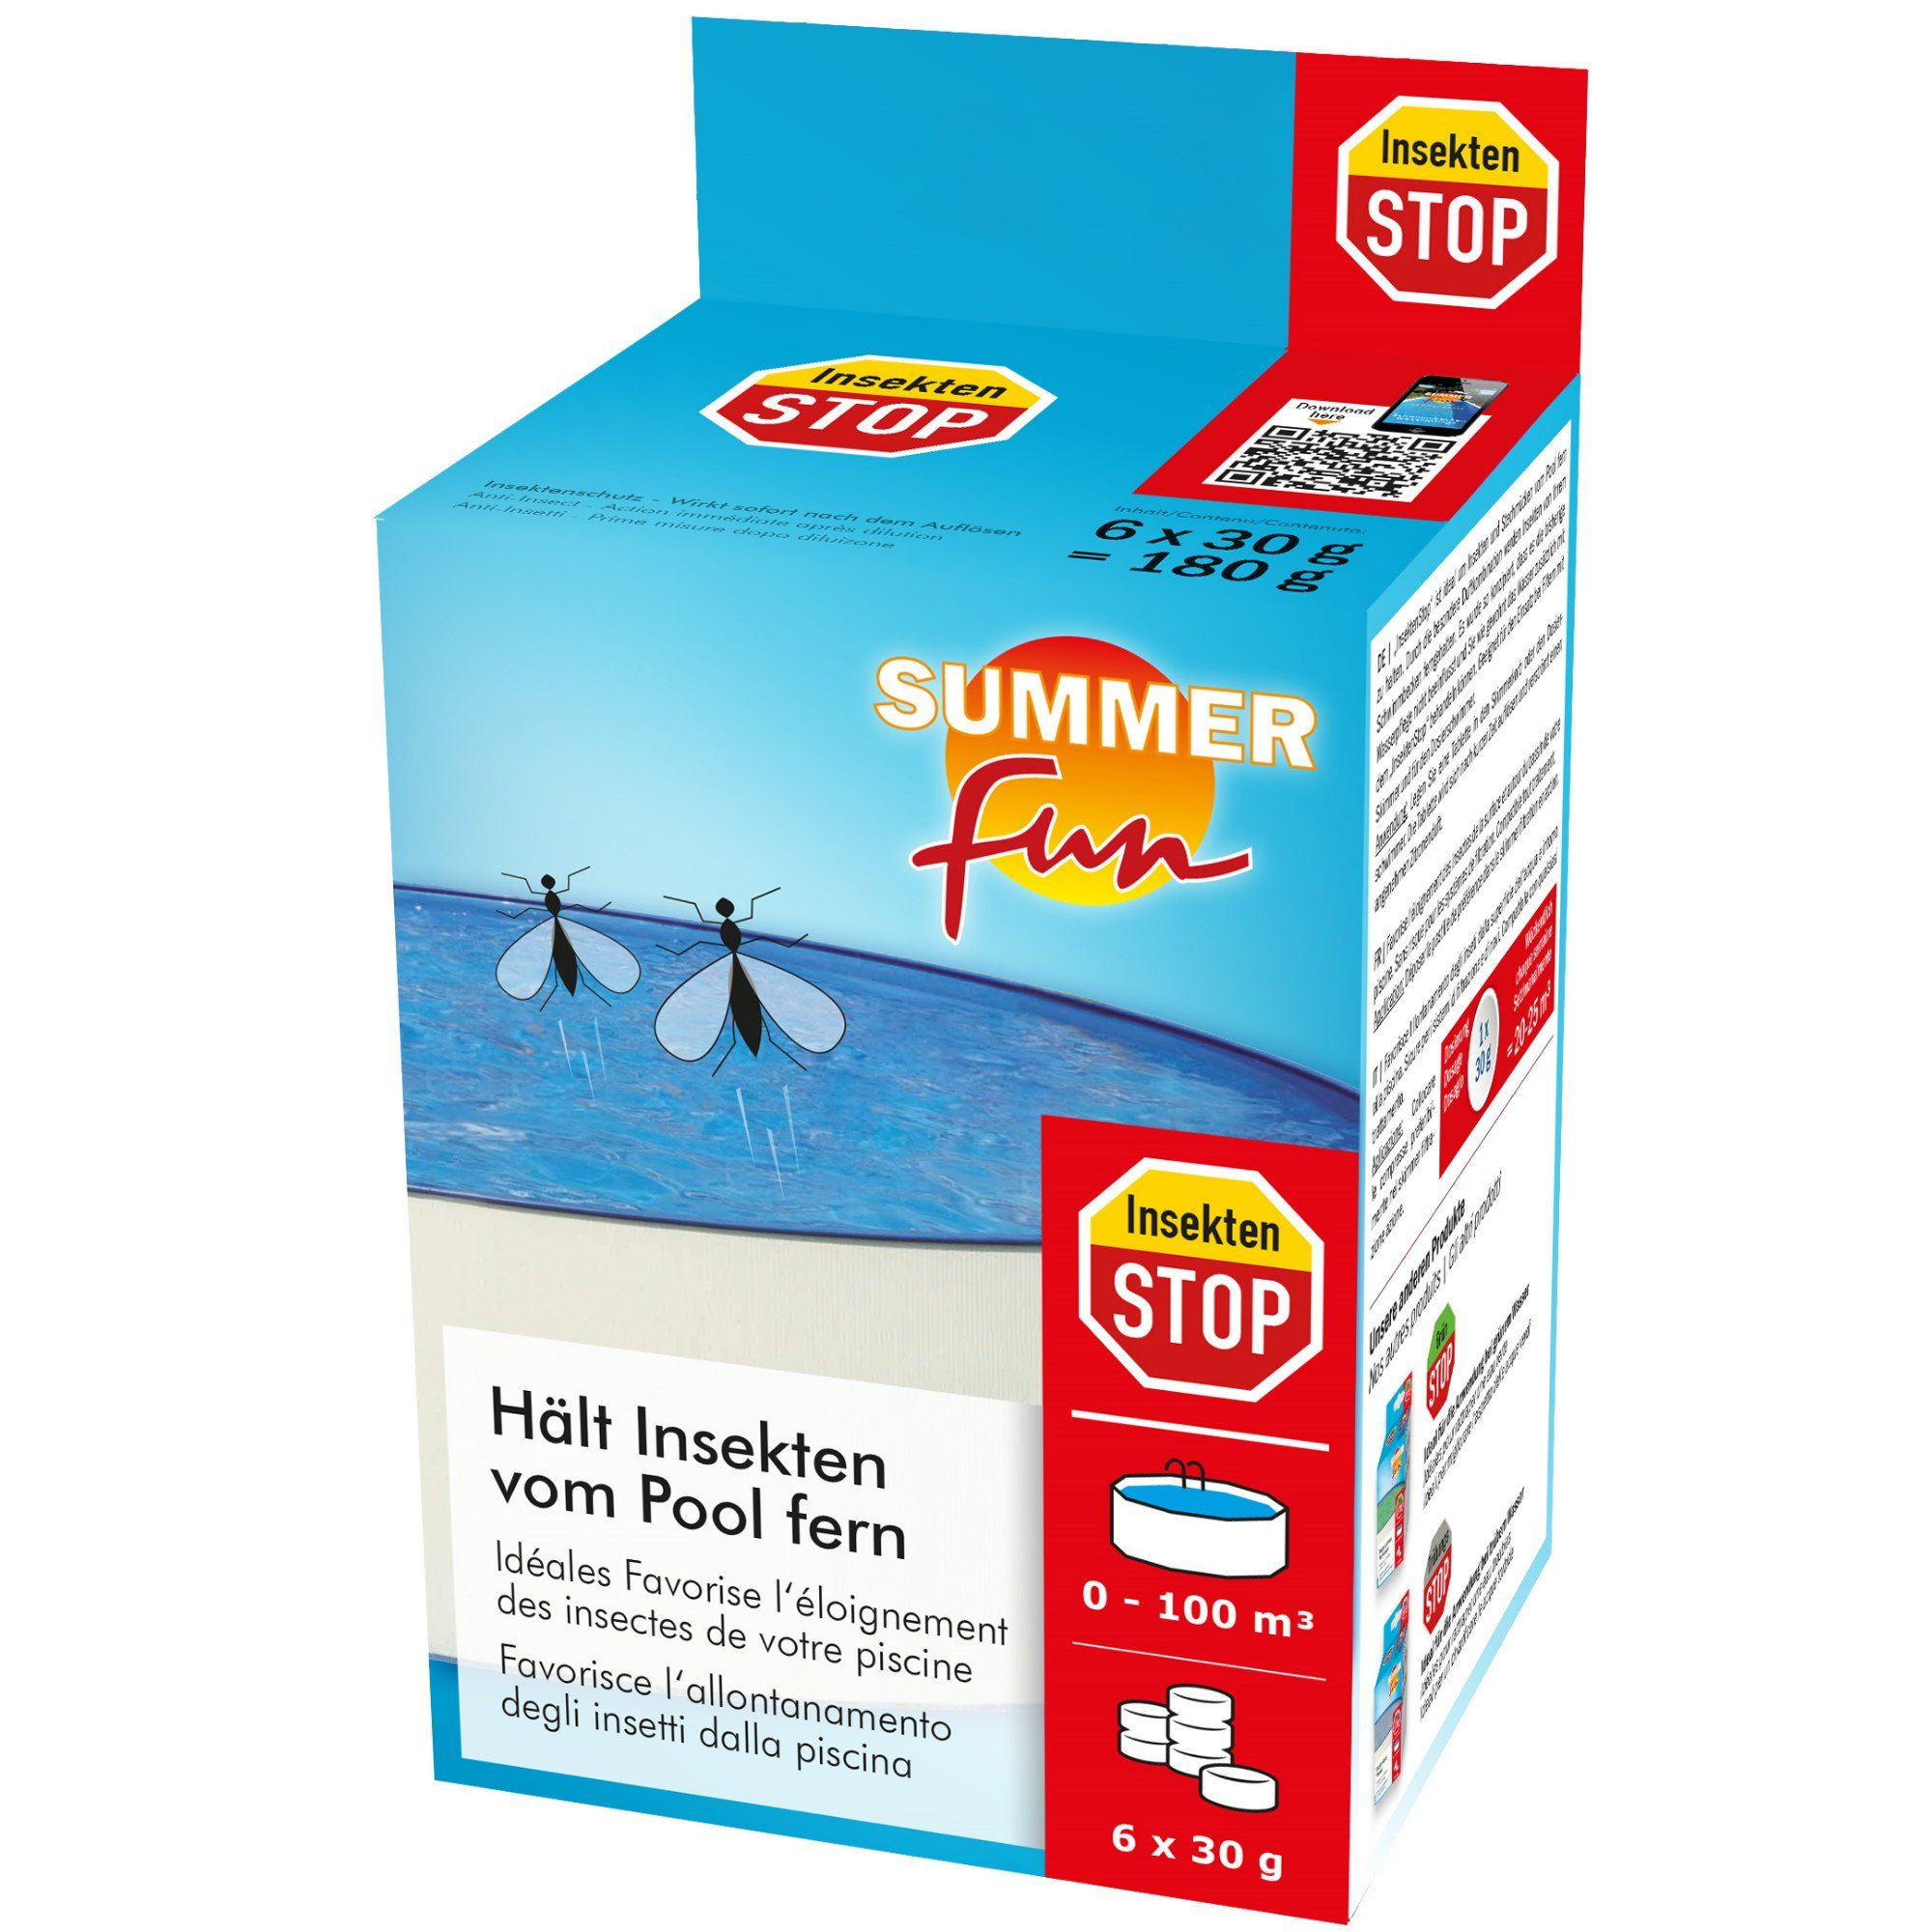 SUMMER FUN Poolpflege Summer Fun - Insektenstopp, 0,18 kg